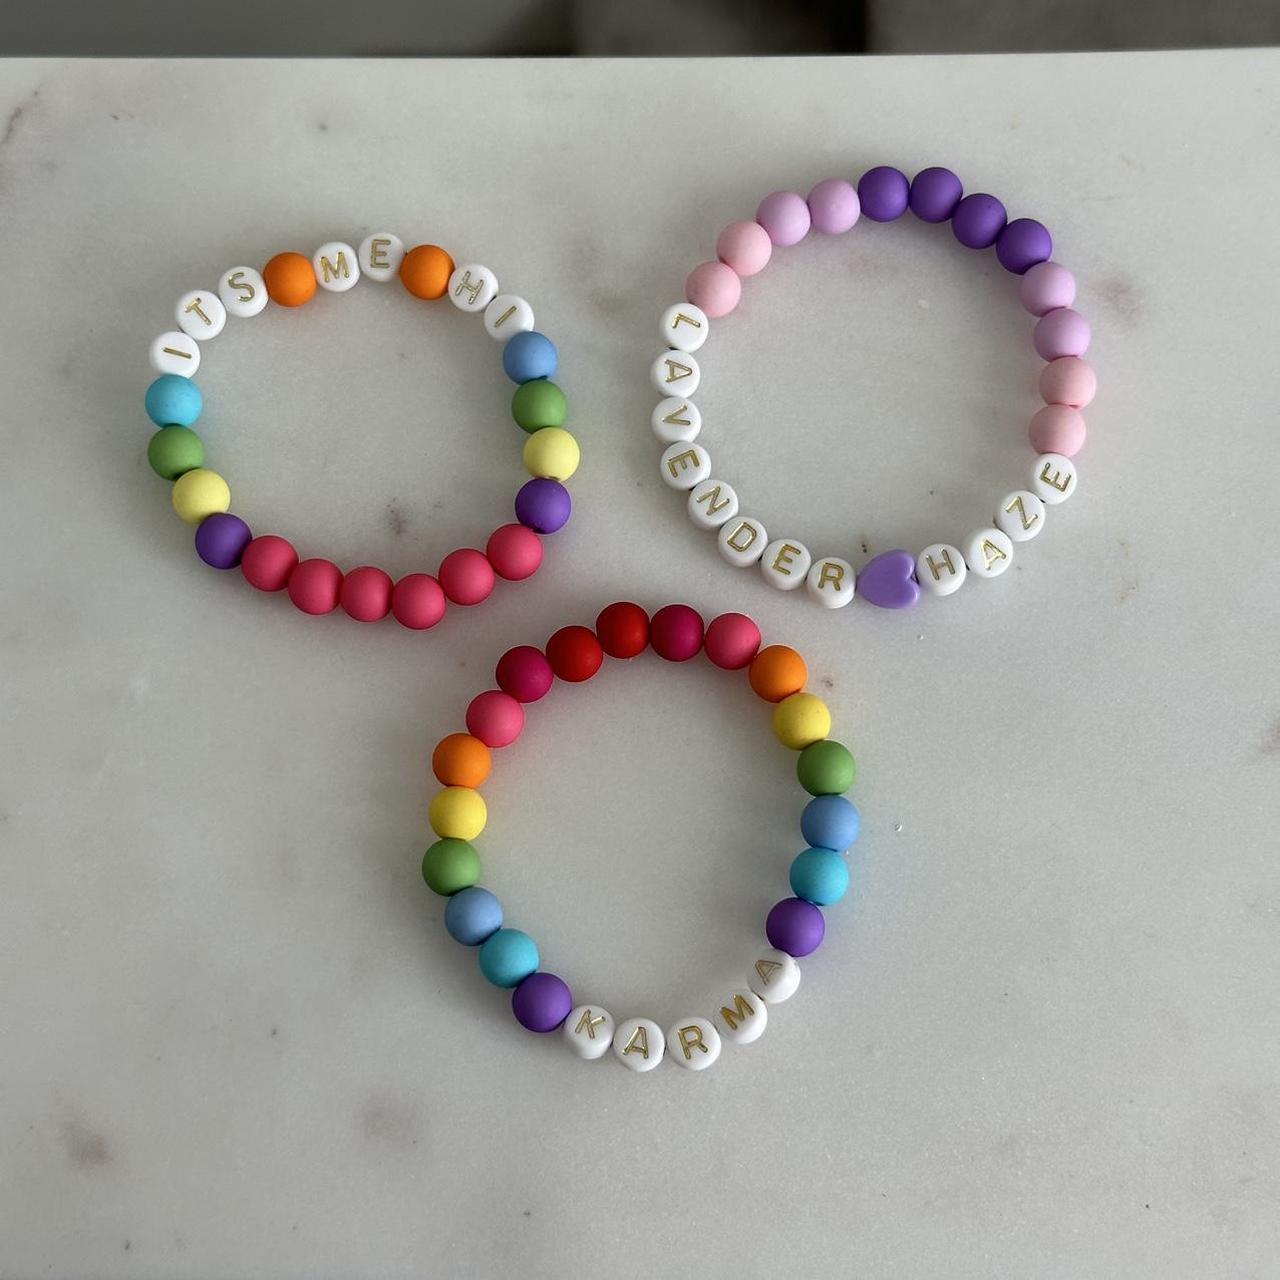 Taylor Swift Friendship Bracelet - it's me hi  Friendship bracelets with  beads, Friendship bracelets designs, Friendship bracelets